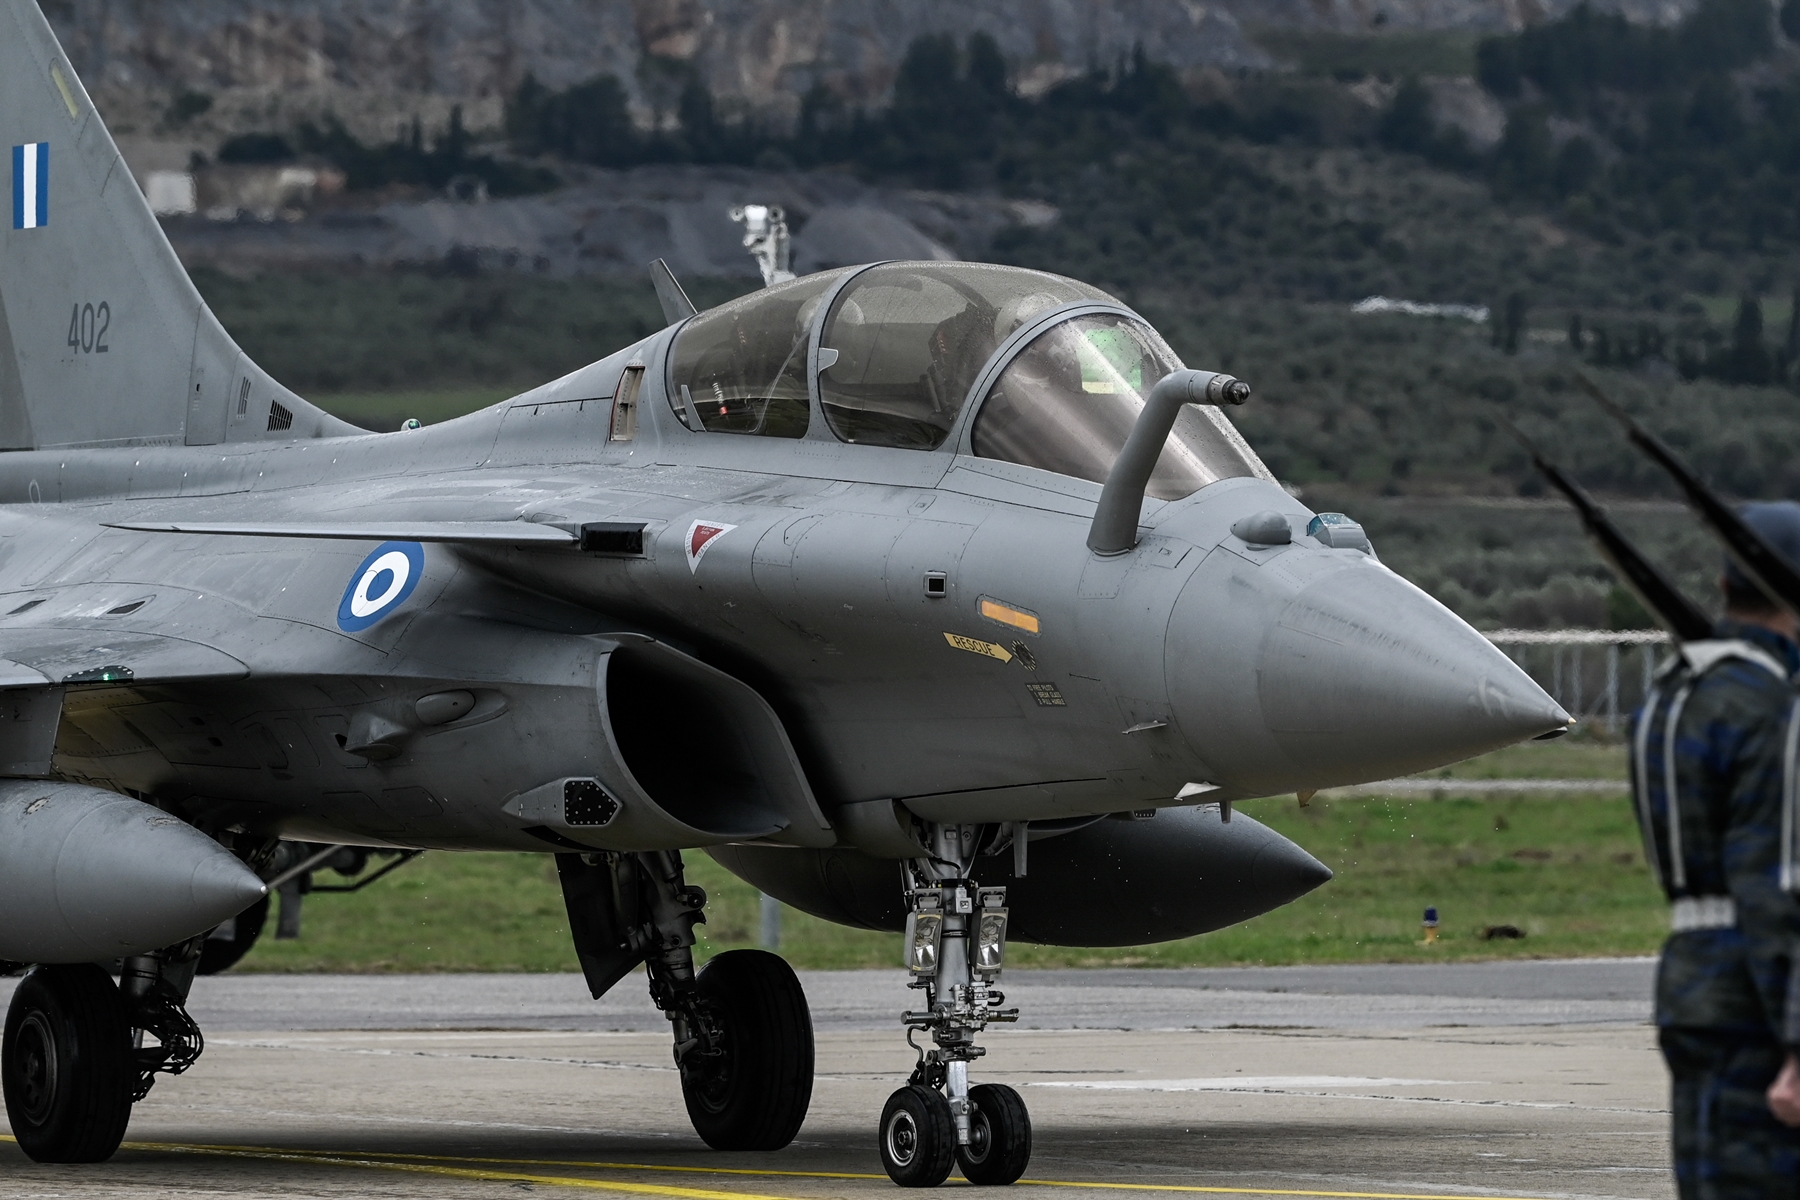 F16 Τουρκία: Ακόμη κι αν εξοπλιστεί ο Ερντογάν, η Ελλάδα θα είναι “πιο μπροστά”